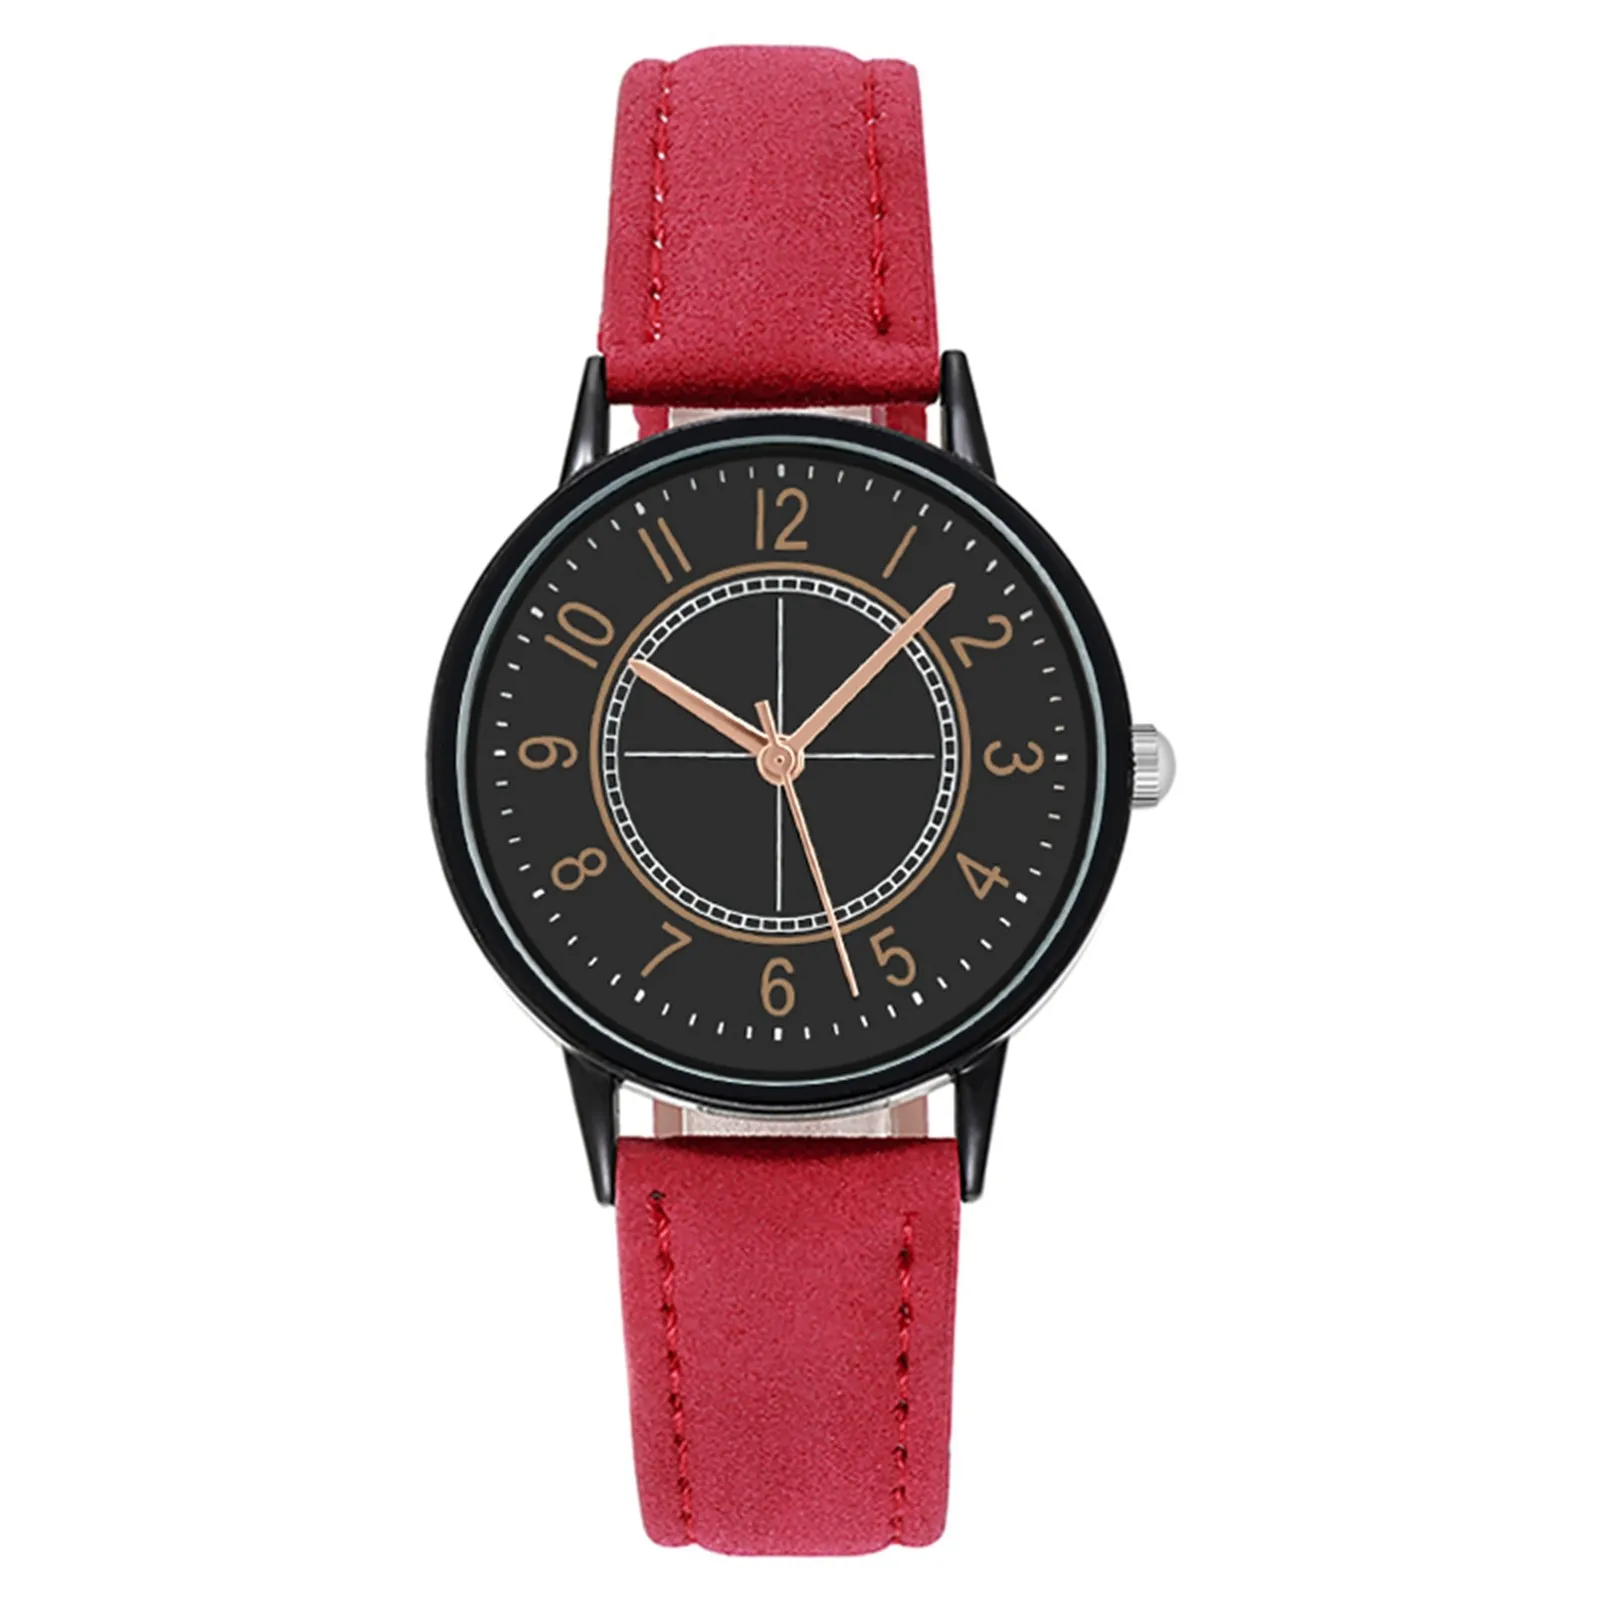 

Women's Watch Quartz Dial Digital Watch Frosted Leather Strap Ladies And Girls' Watch часы женские наручные Reloj mujer Relógio